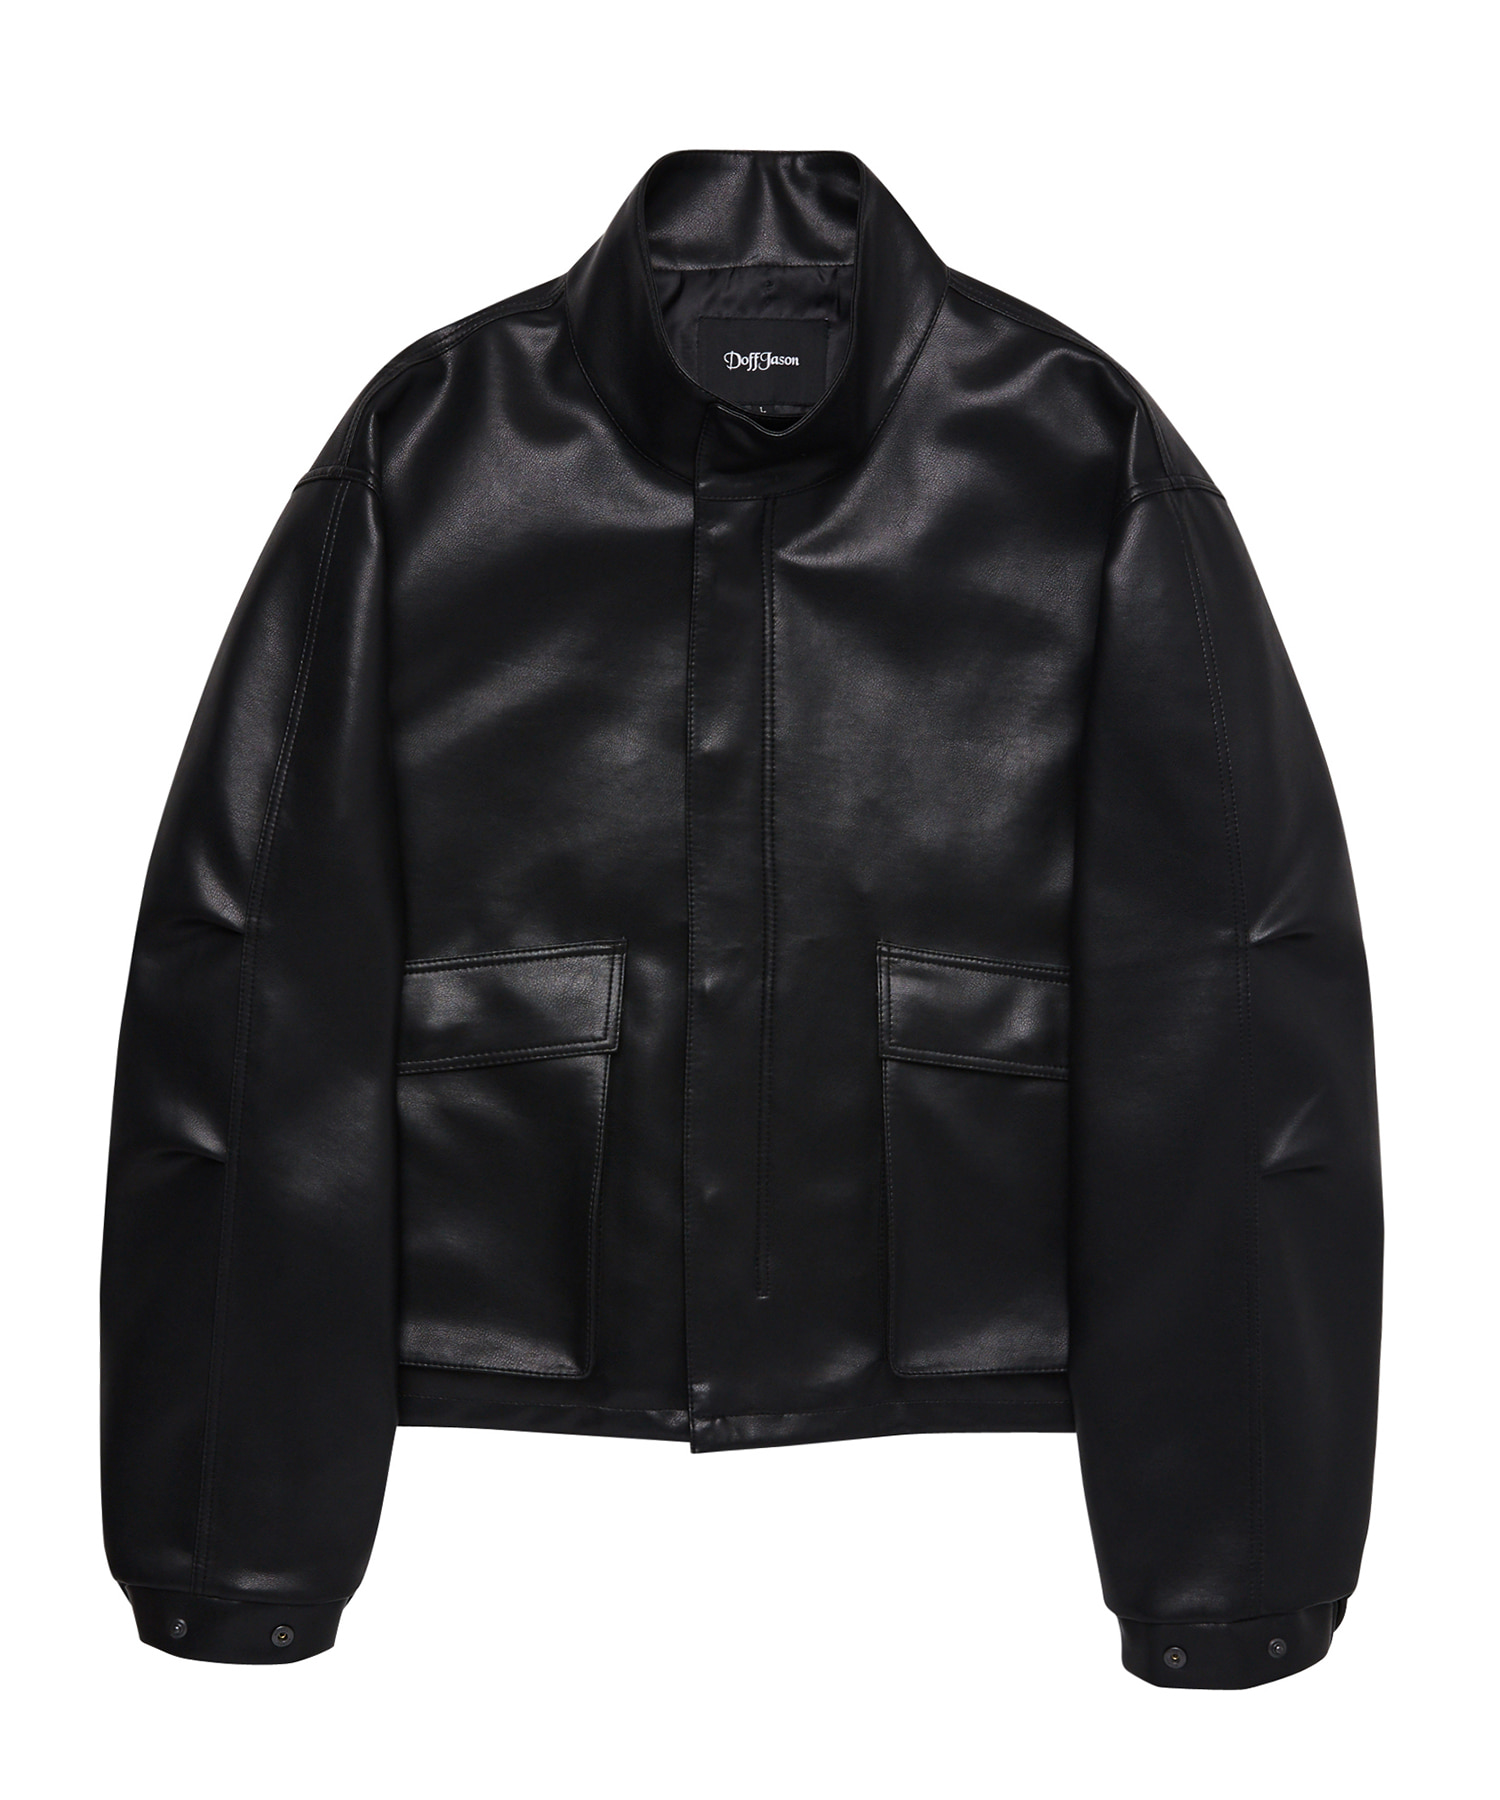 Overfit vegan Leather blouson jacket